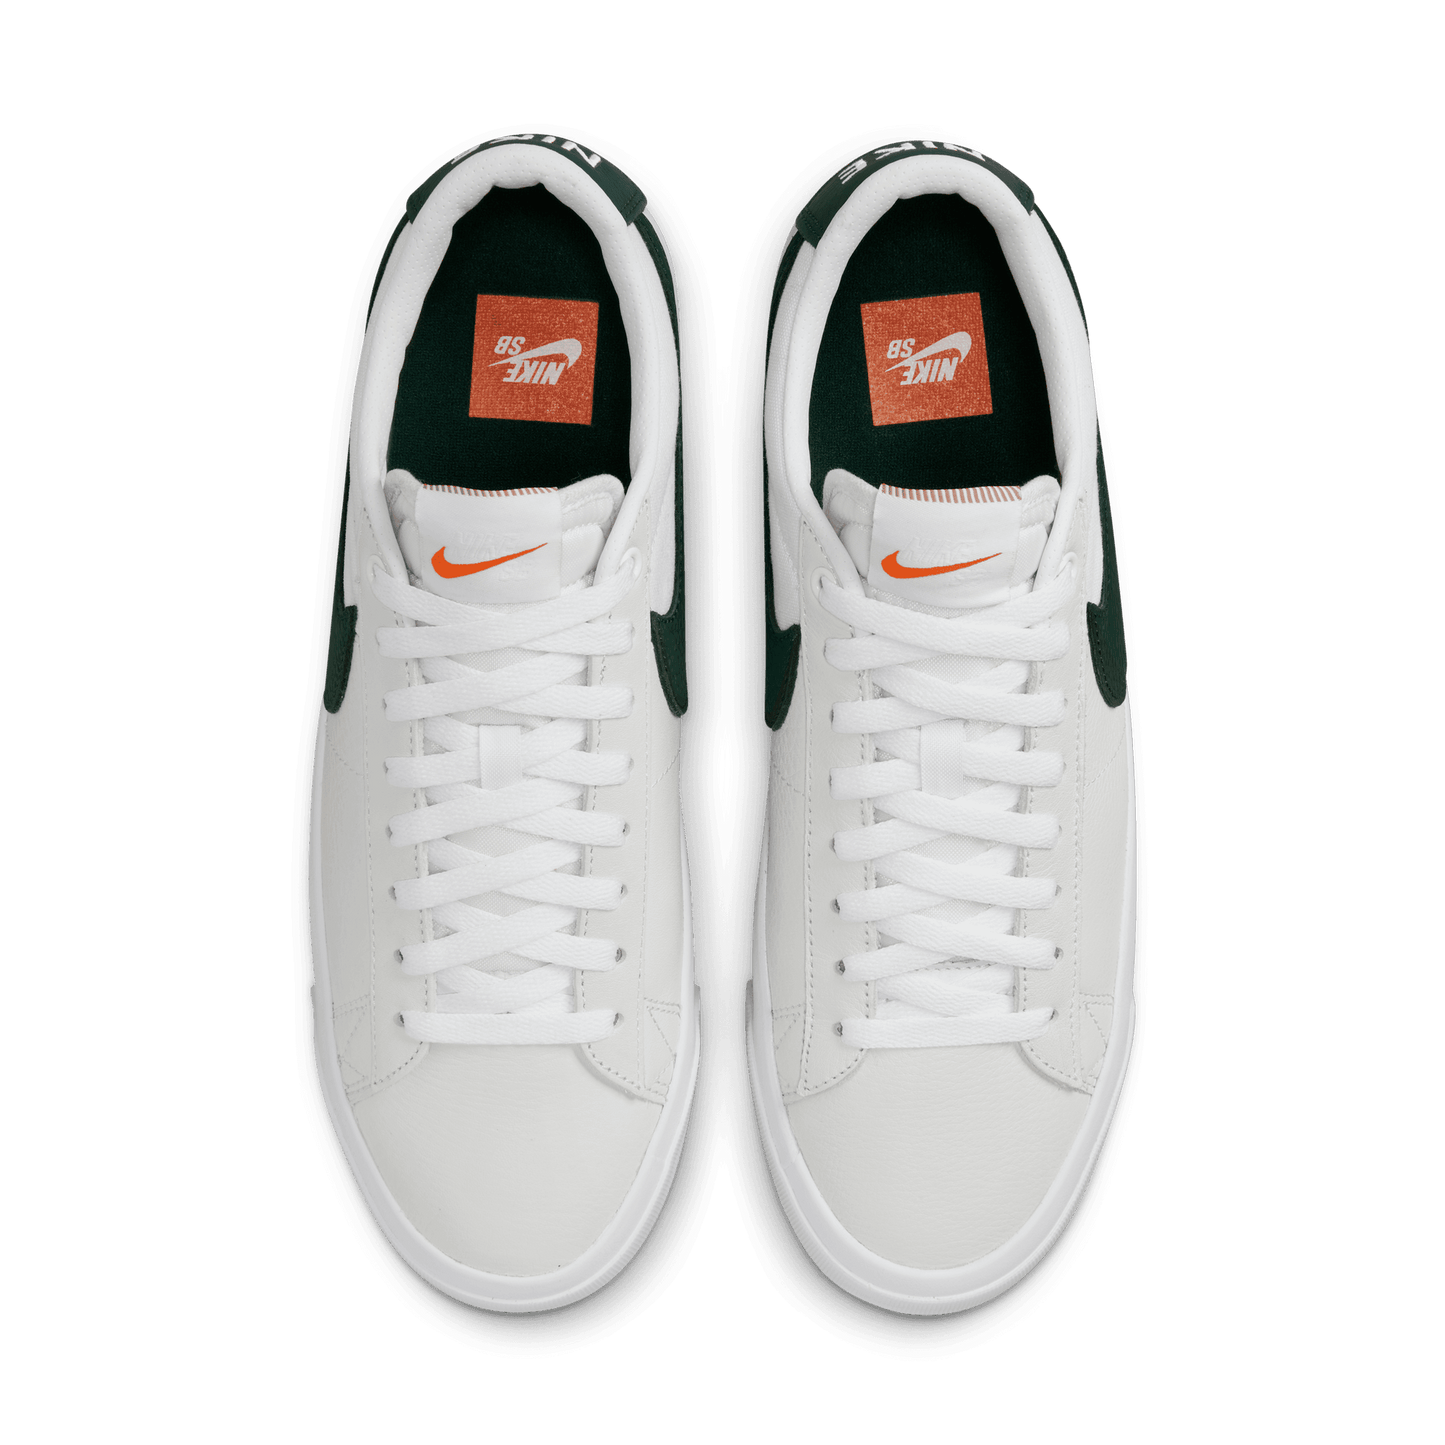 Nike SB Blazer Low Pro GT Orange Label white pro green